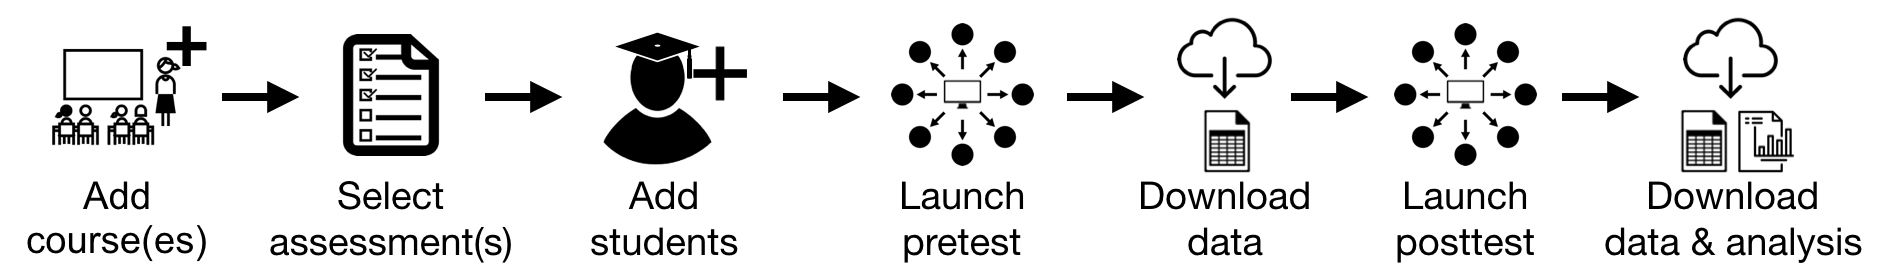 A visual representation of LASSO workflow.